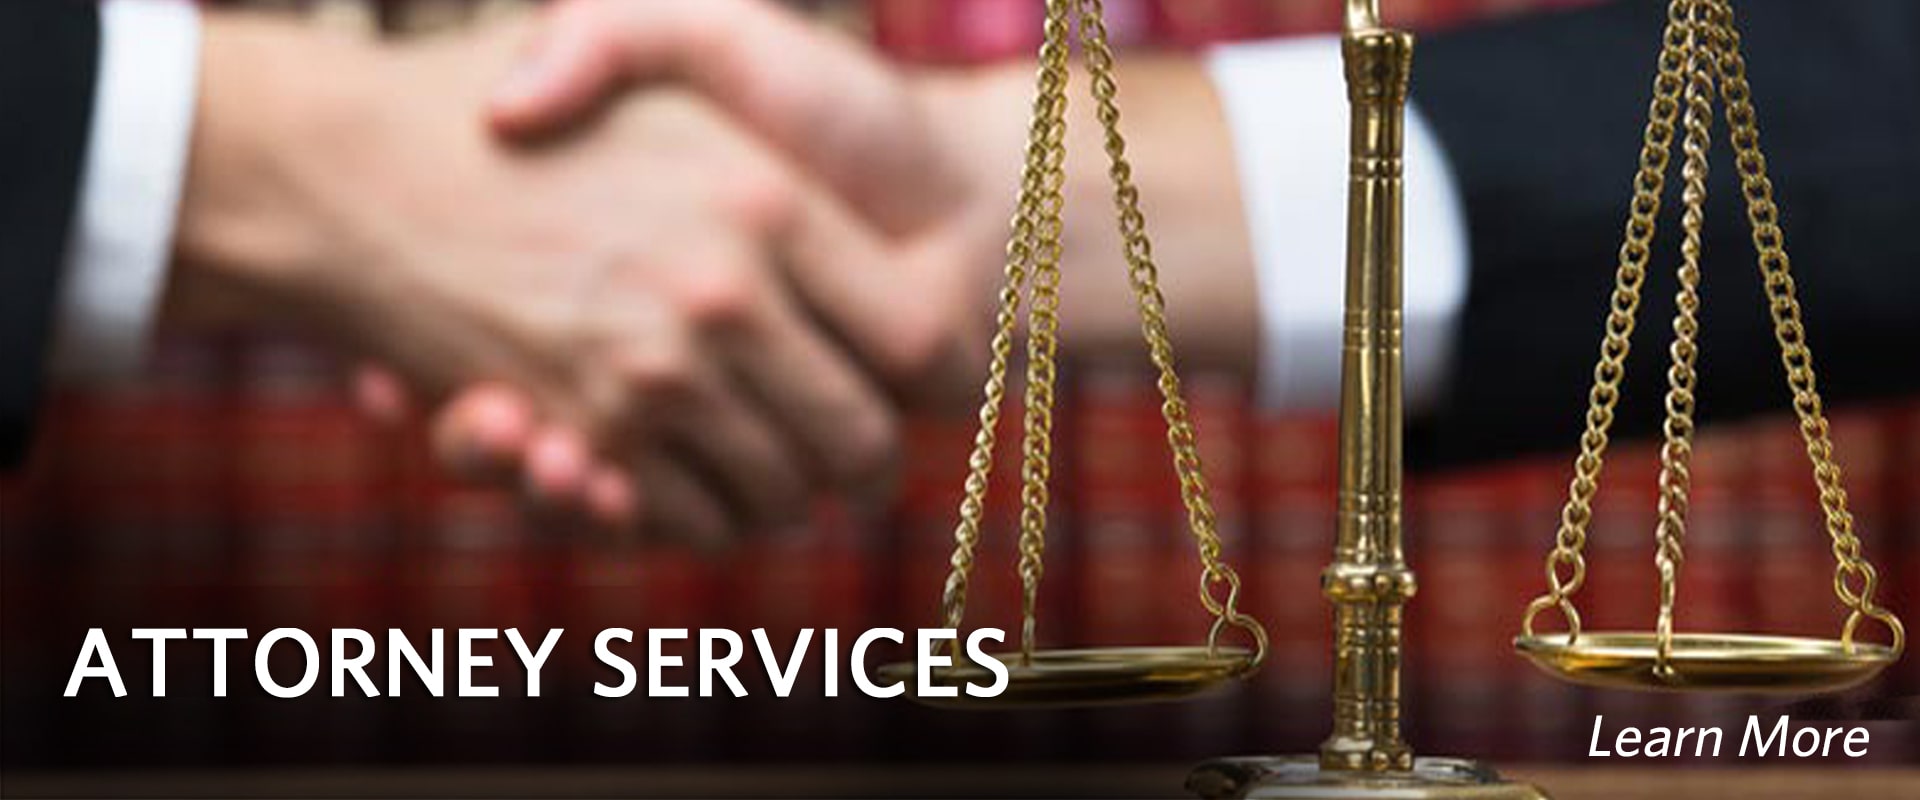 attorney_services-min